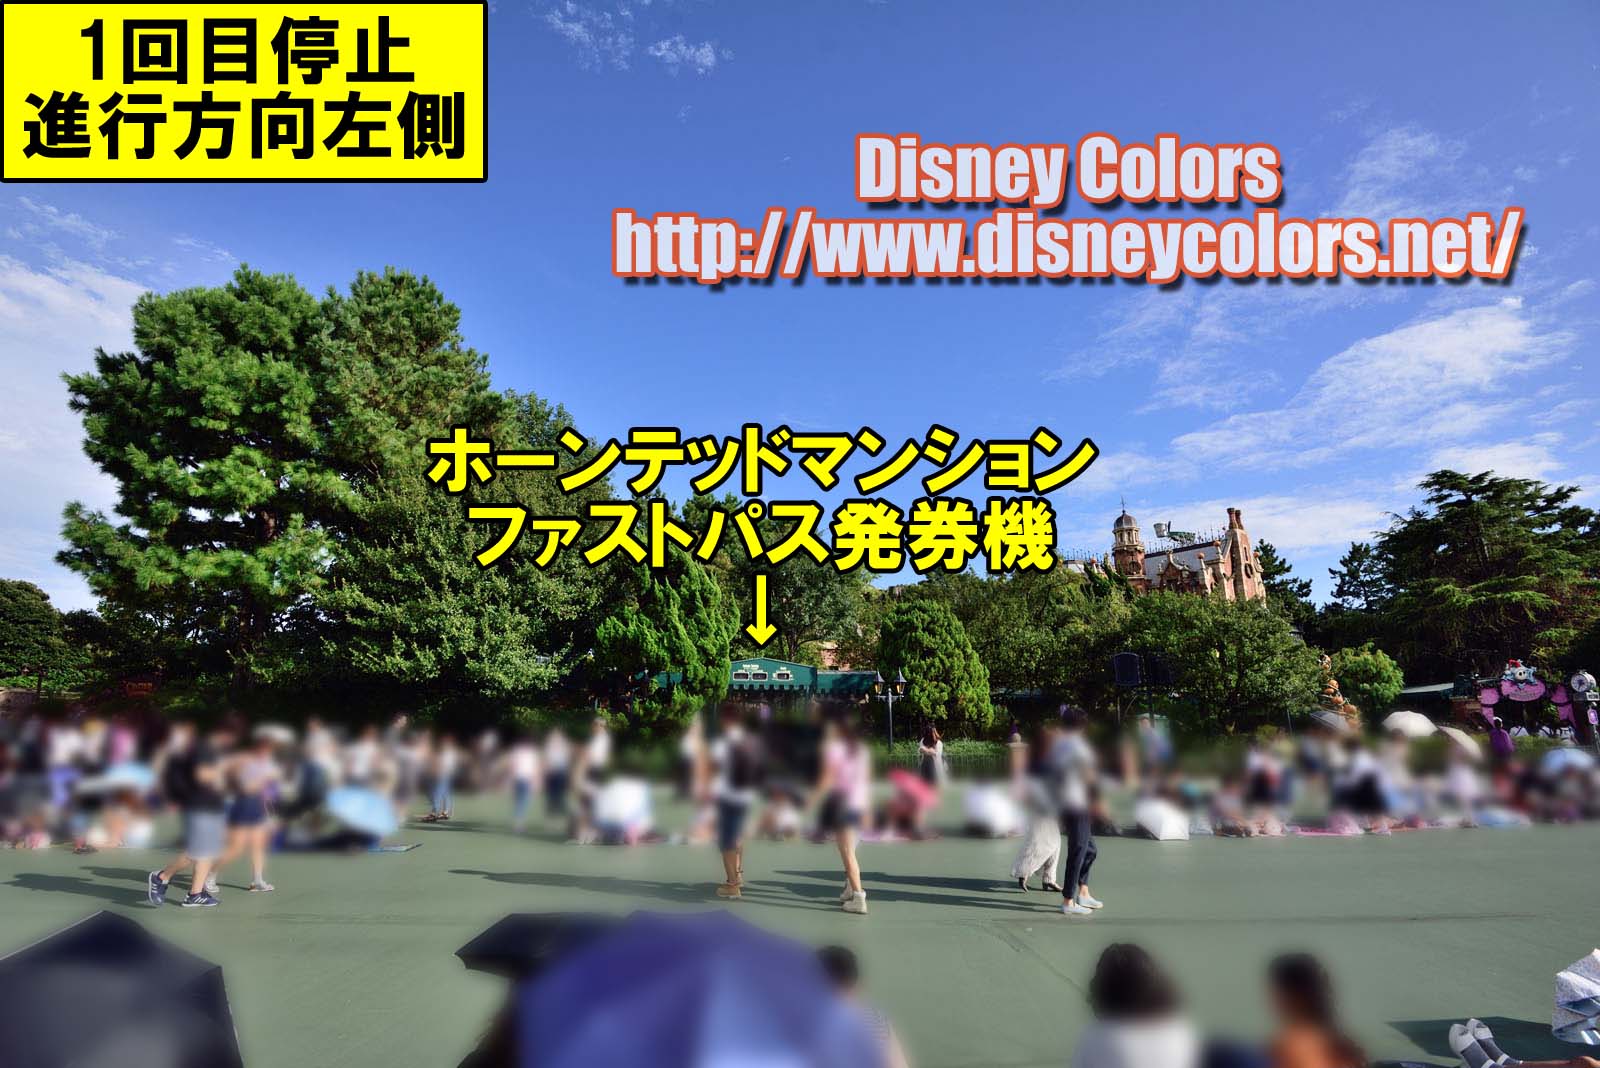 Tdl ハロウィーン ポップンライブ16 フロート停止位置 鑑賞ガイド Disney Colors Event Guide